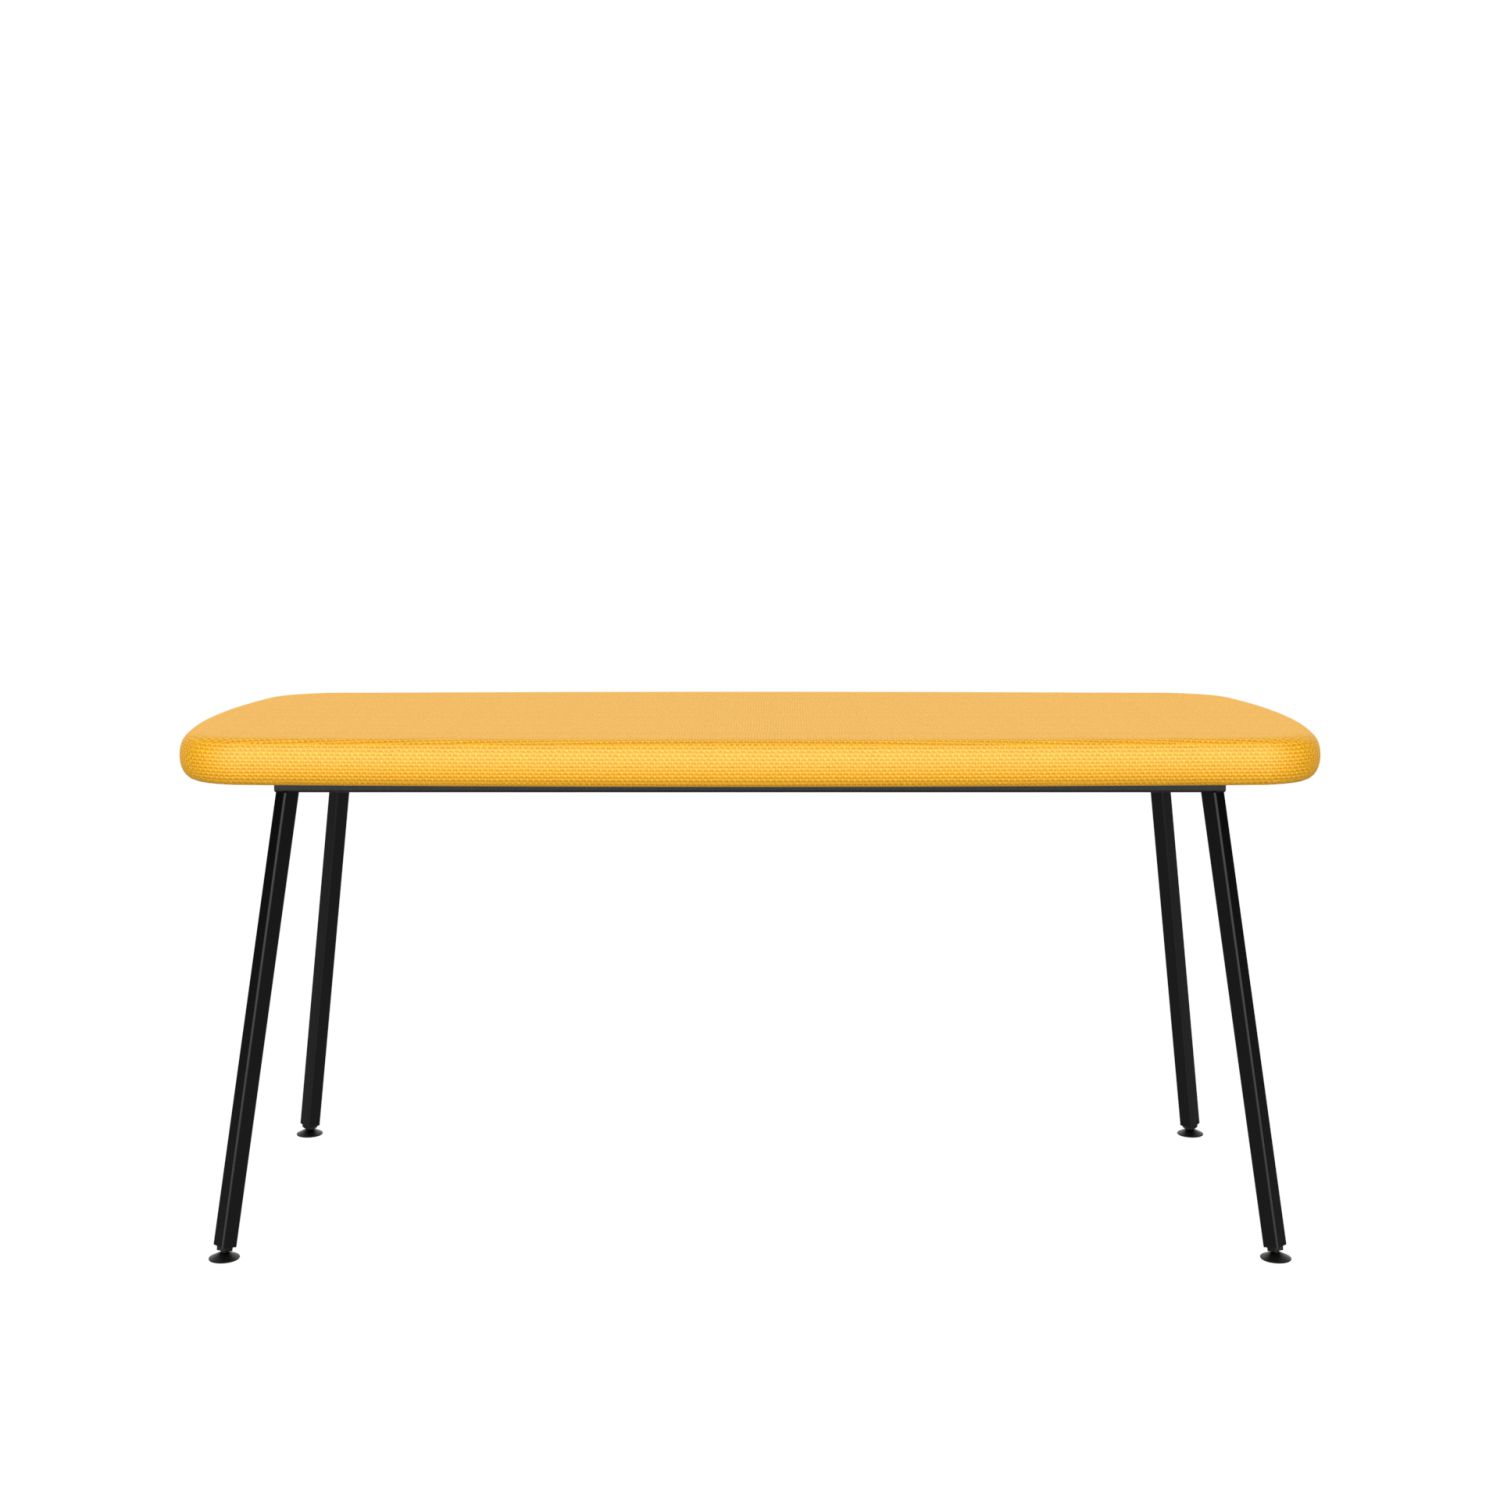 lensvelt maarten baas bench not stackable without armrests lemon yellow 051 hard leg ends